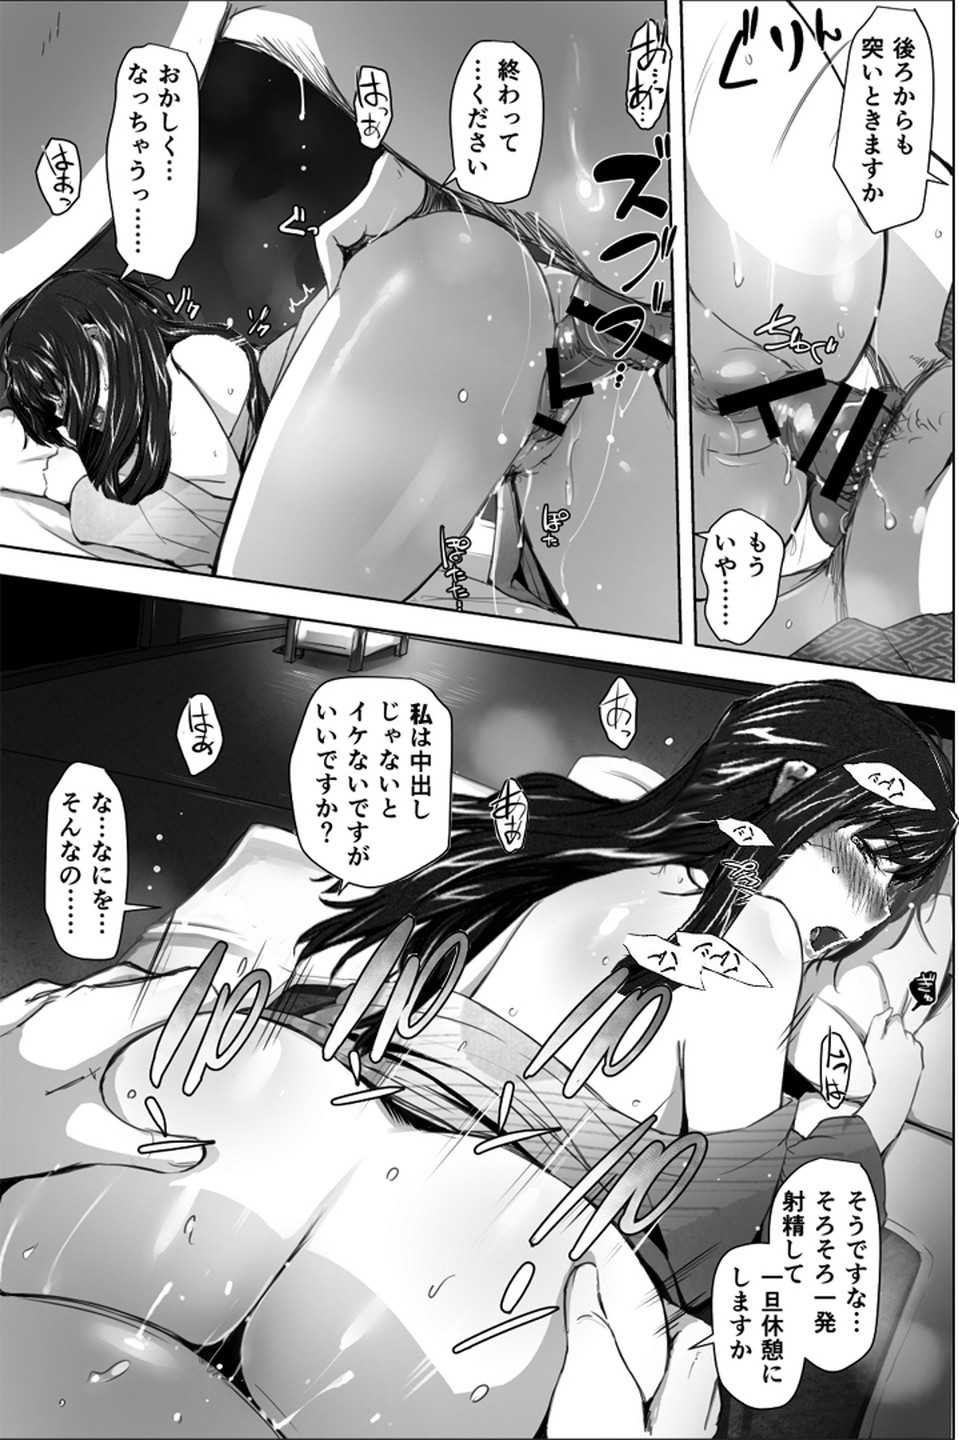 Sakiko-san in delusion Vol.1 Ver.1.1 ~Sakiko-san's circumstance at an educational training~ Stupid Sakiko (collage) on-going - Page 13